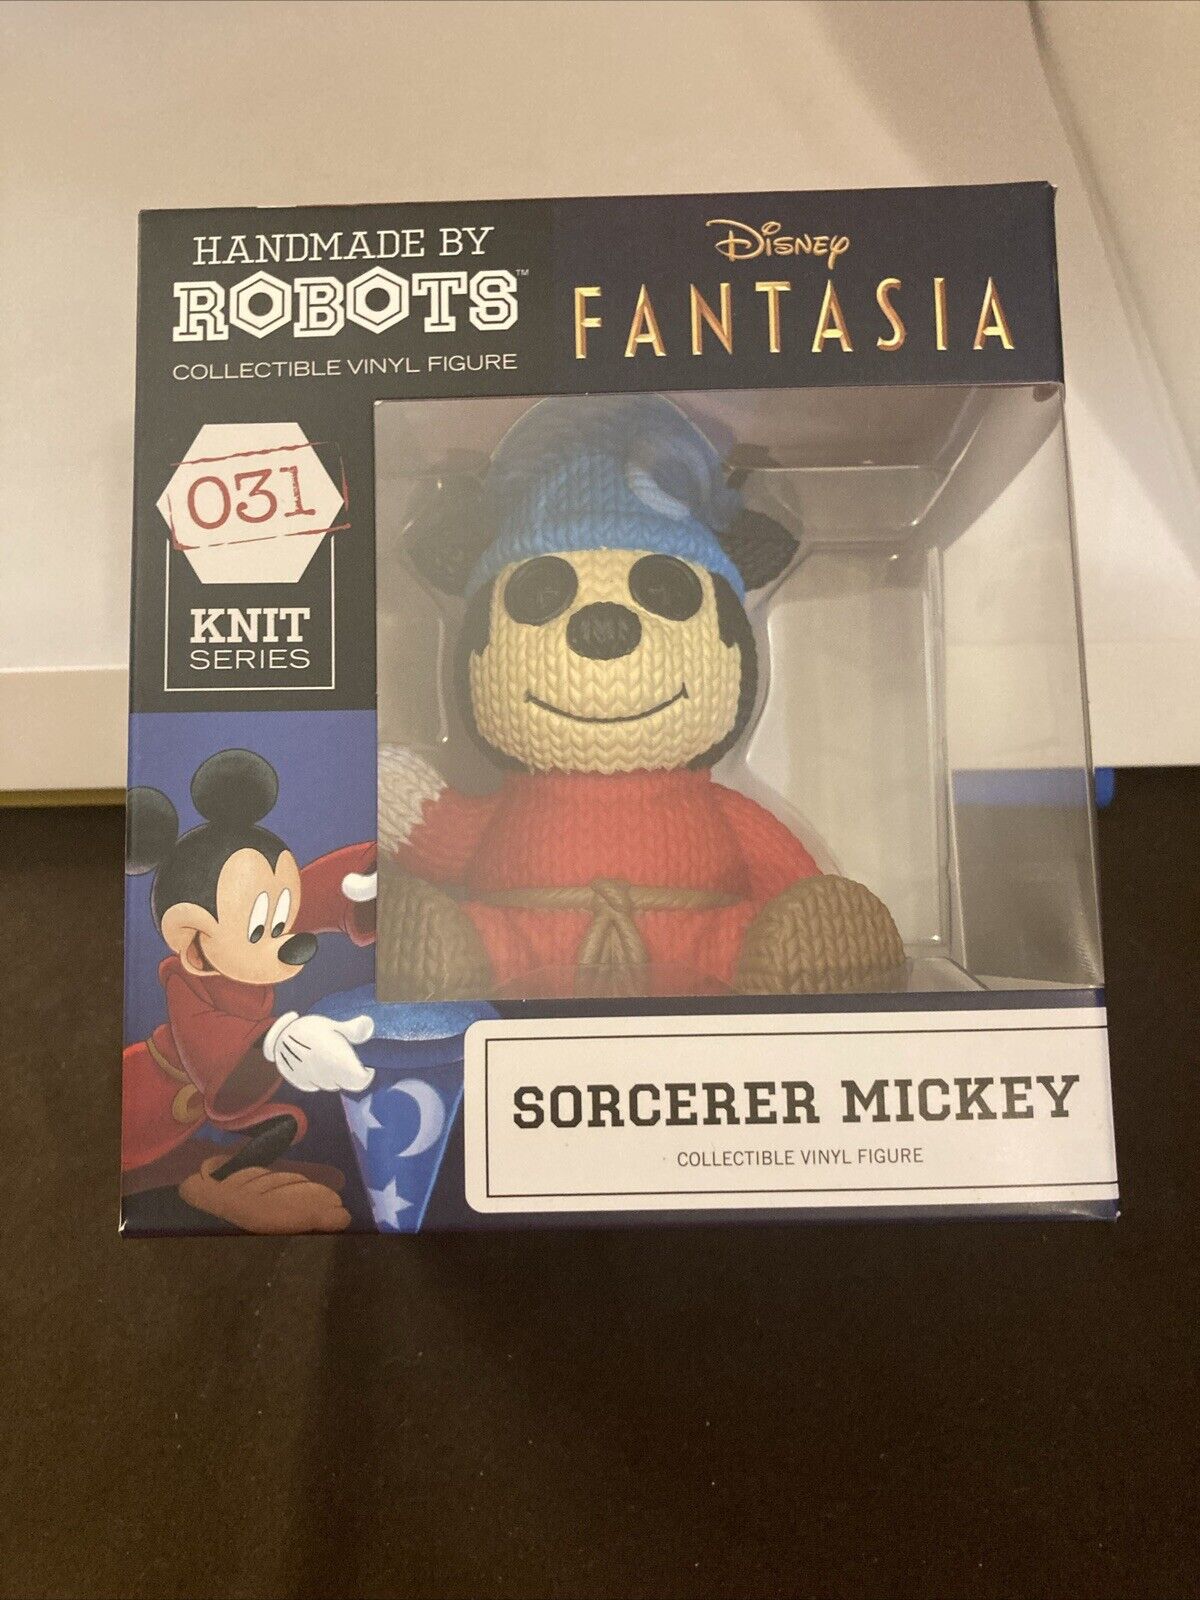 Handmade by Robots Disney #031 Sorcerer Mickey Vinyl Figure Fantasia Movie - New